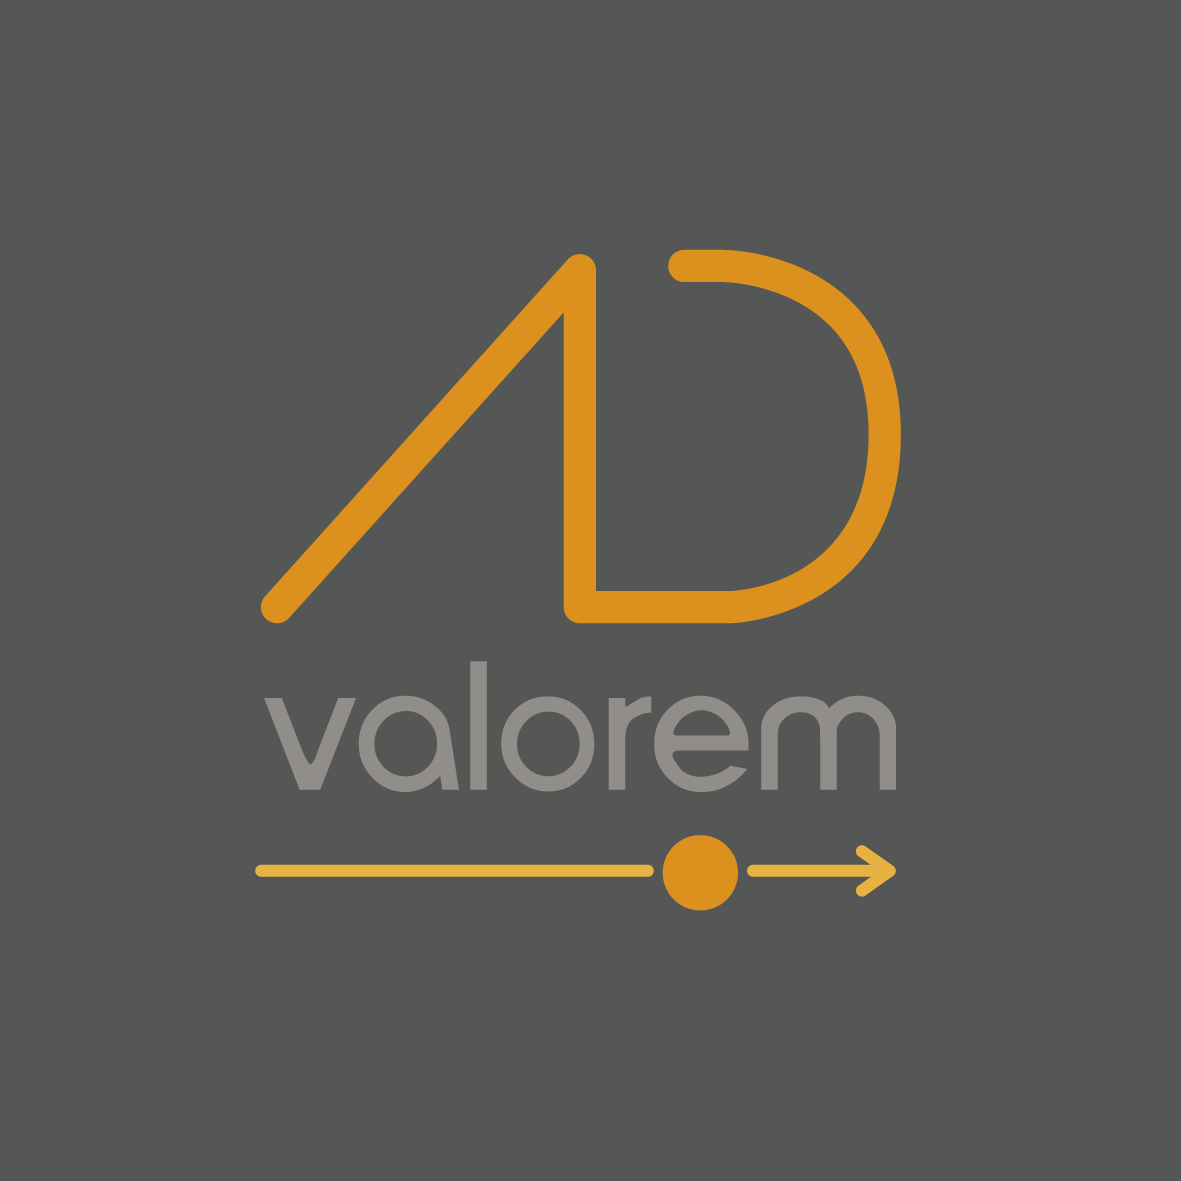 Ad-Valorem Logo photo - 1